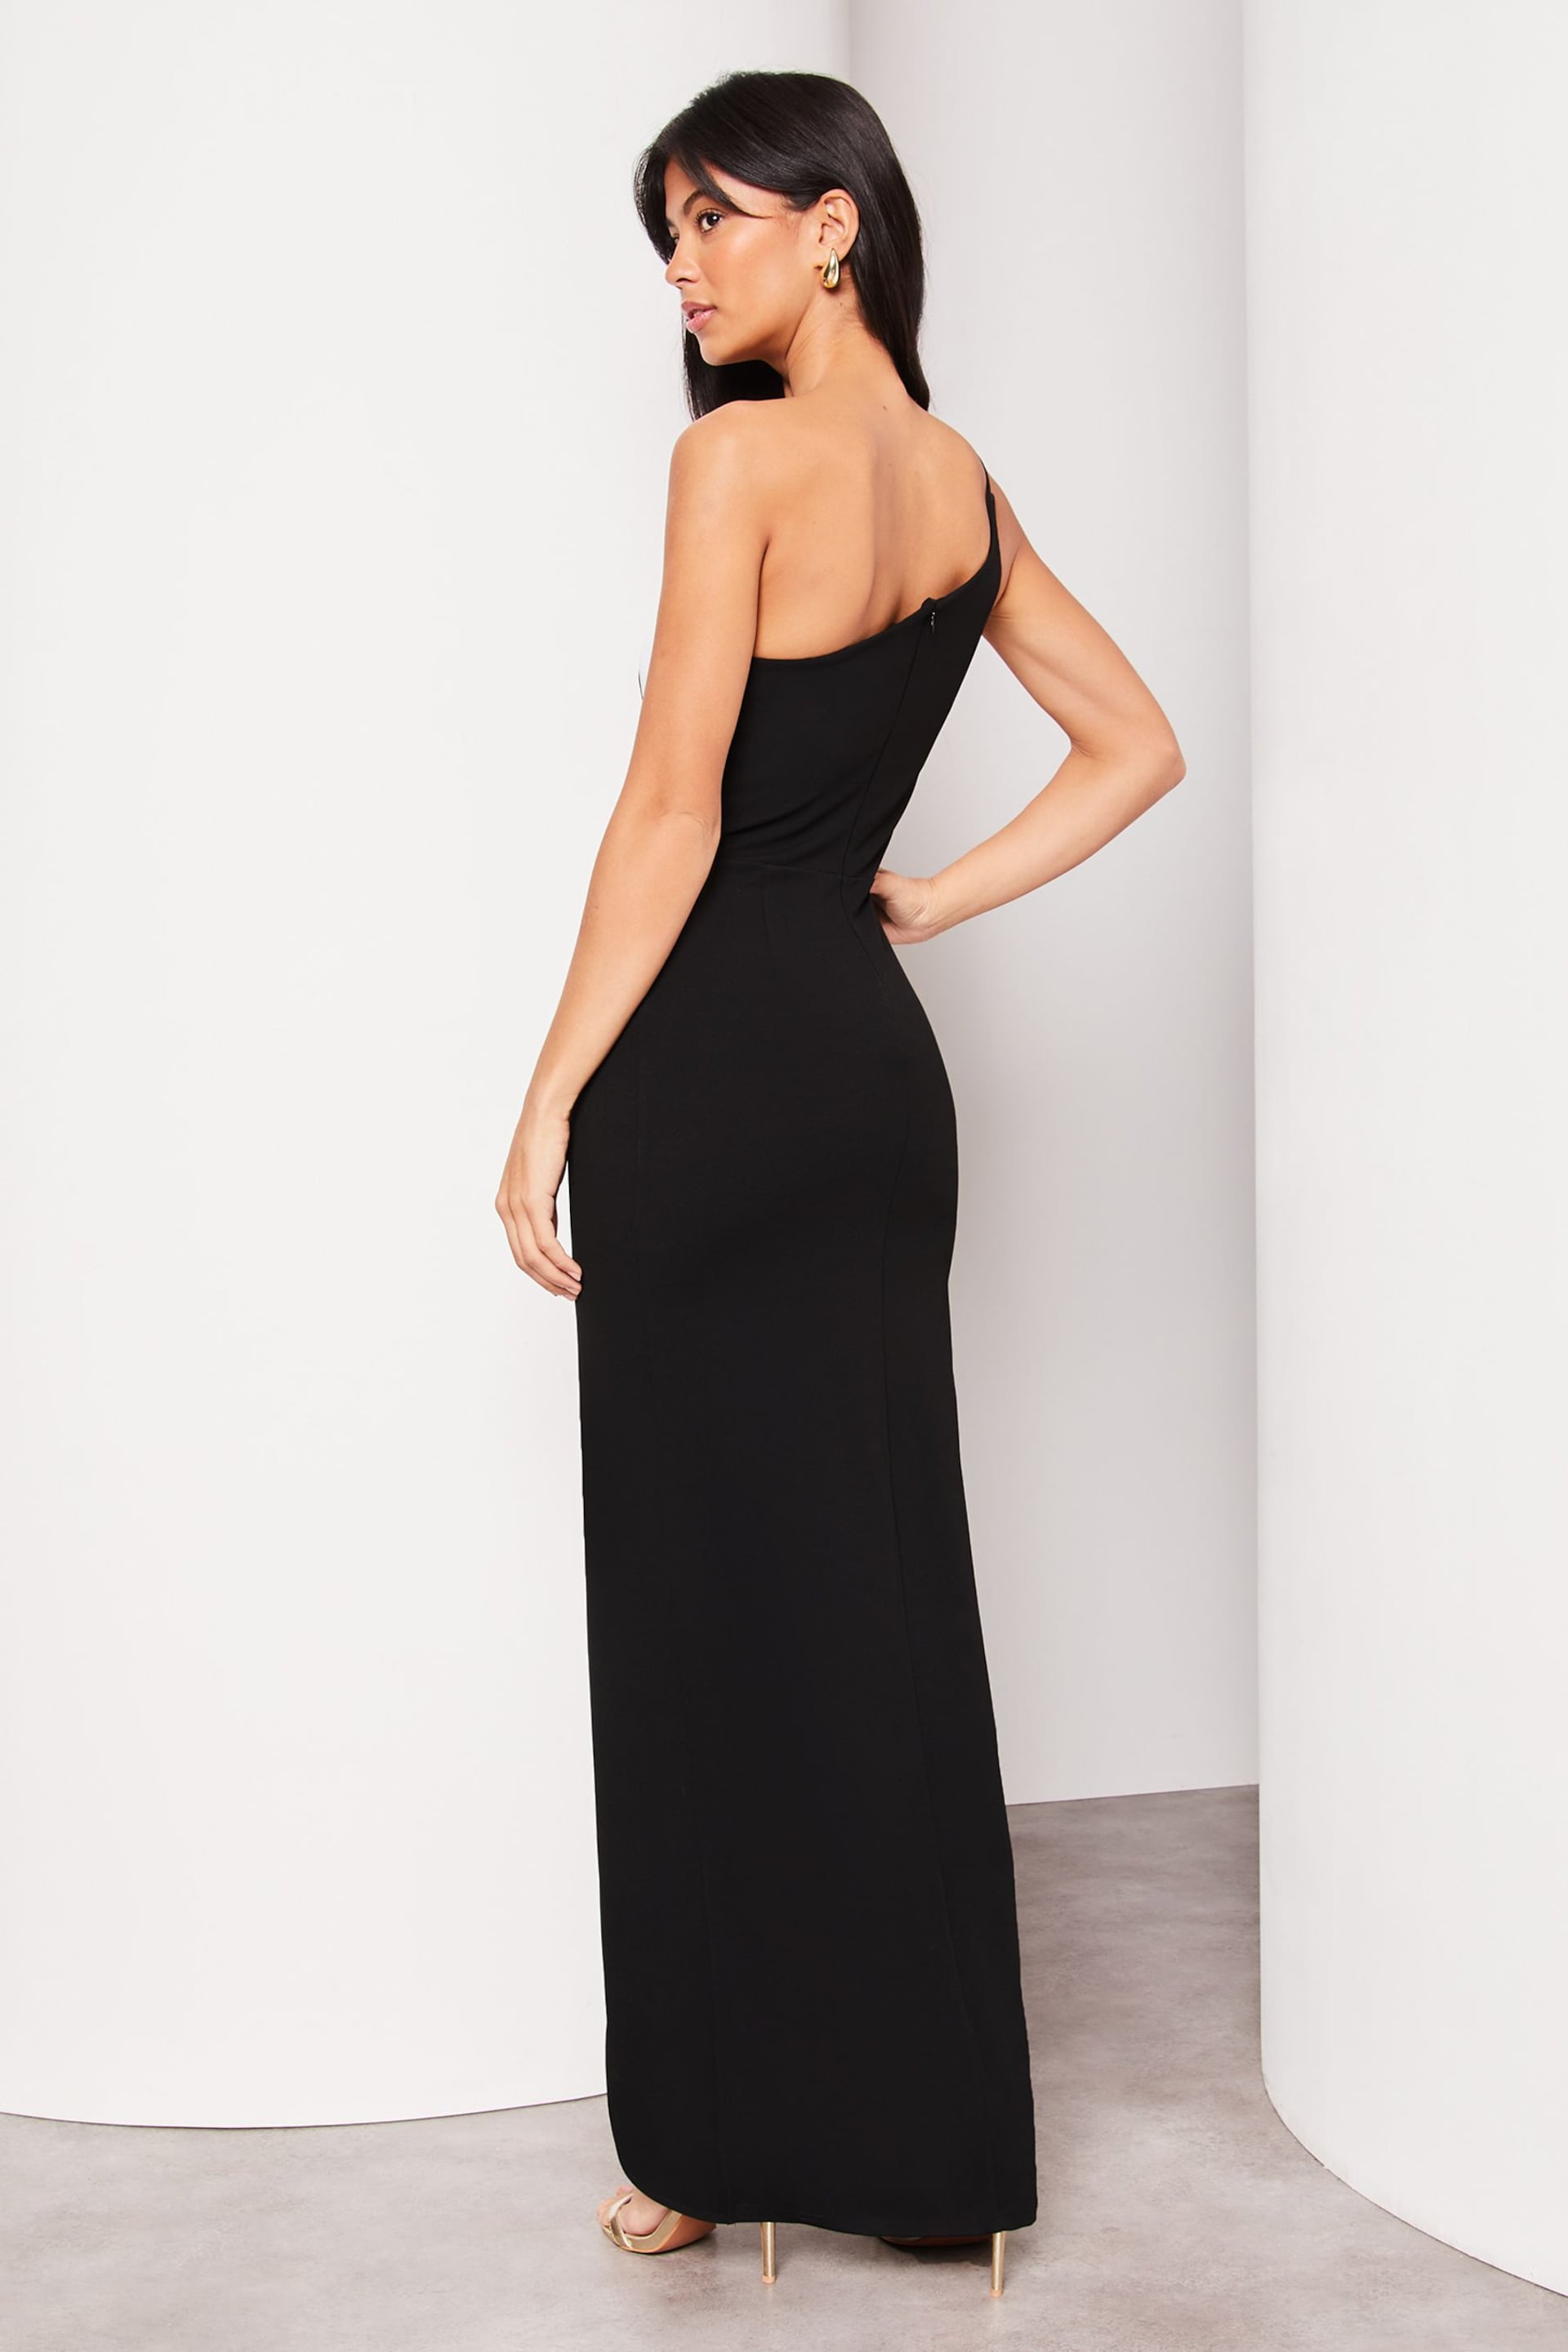 Lipsy Black/White One Shoulder Chain Strap Split Detail Maxi Dress - Image 2 of 4